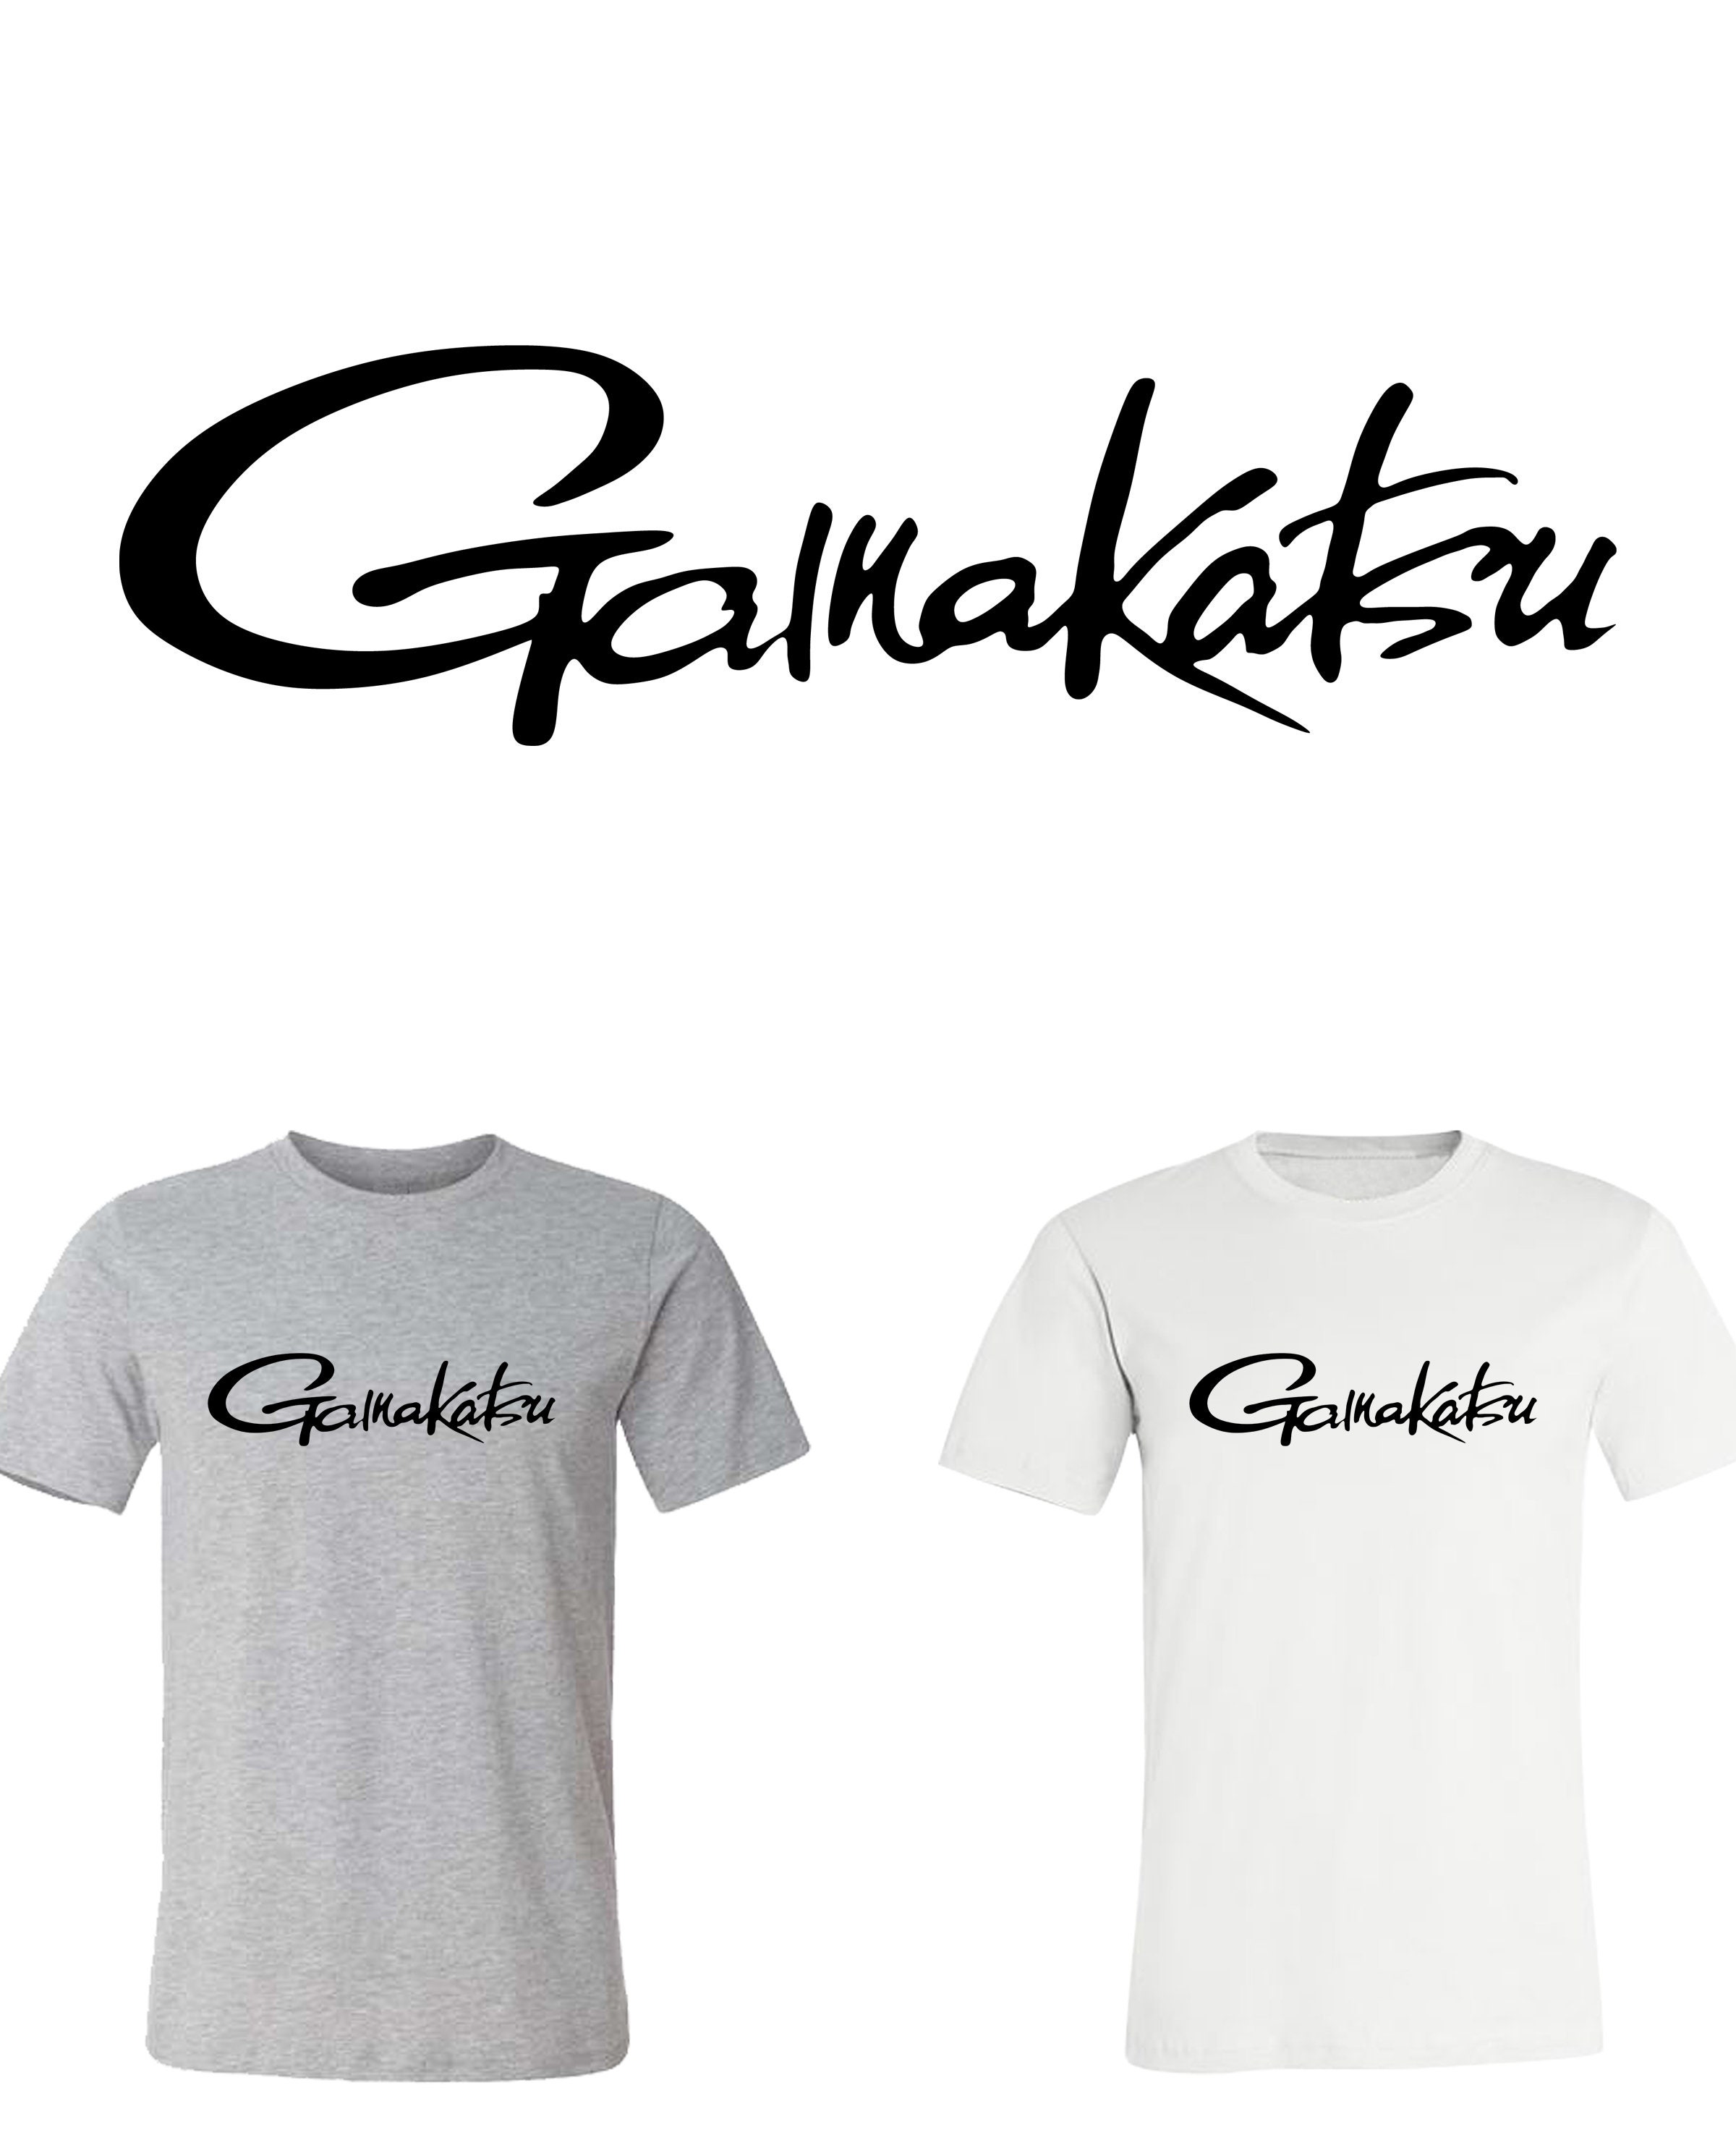 Gamagatsu Hooks Fishing logo Graphic T-Shirts Cotton Tee NEW S-6XL Fast  Ship!